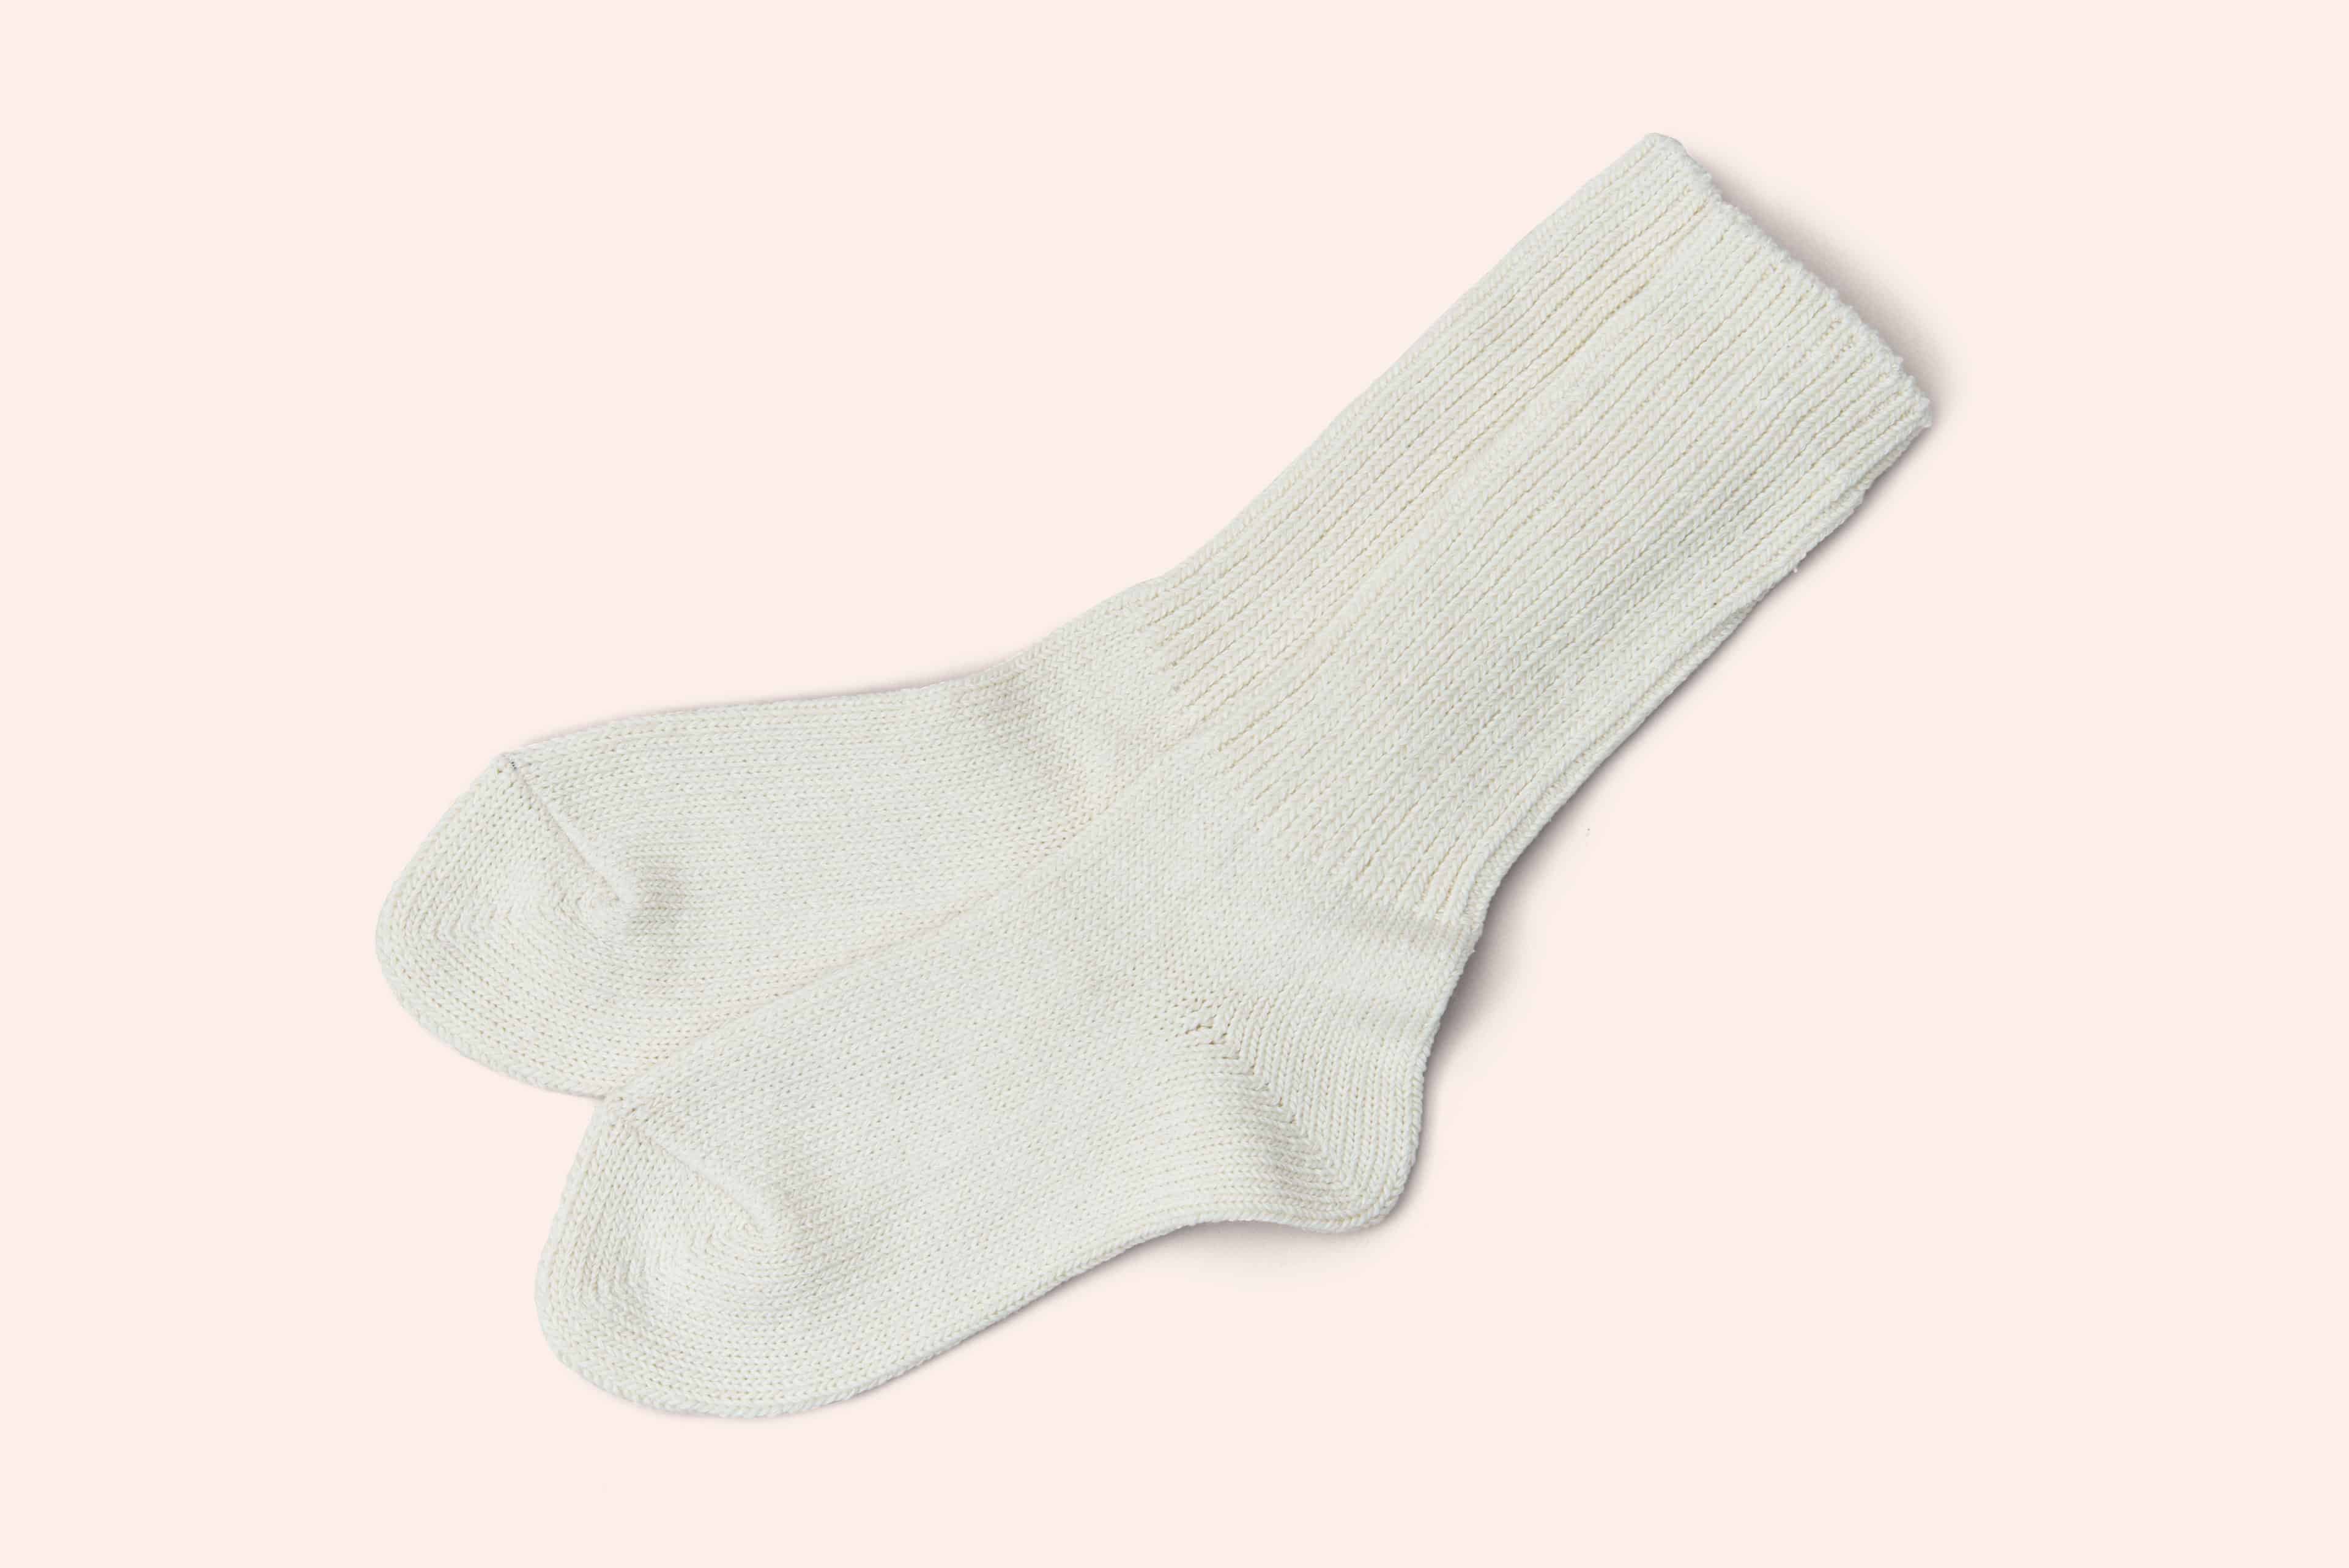 tokyobike lucky socks